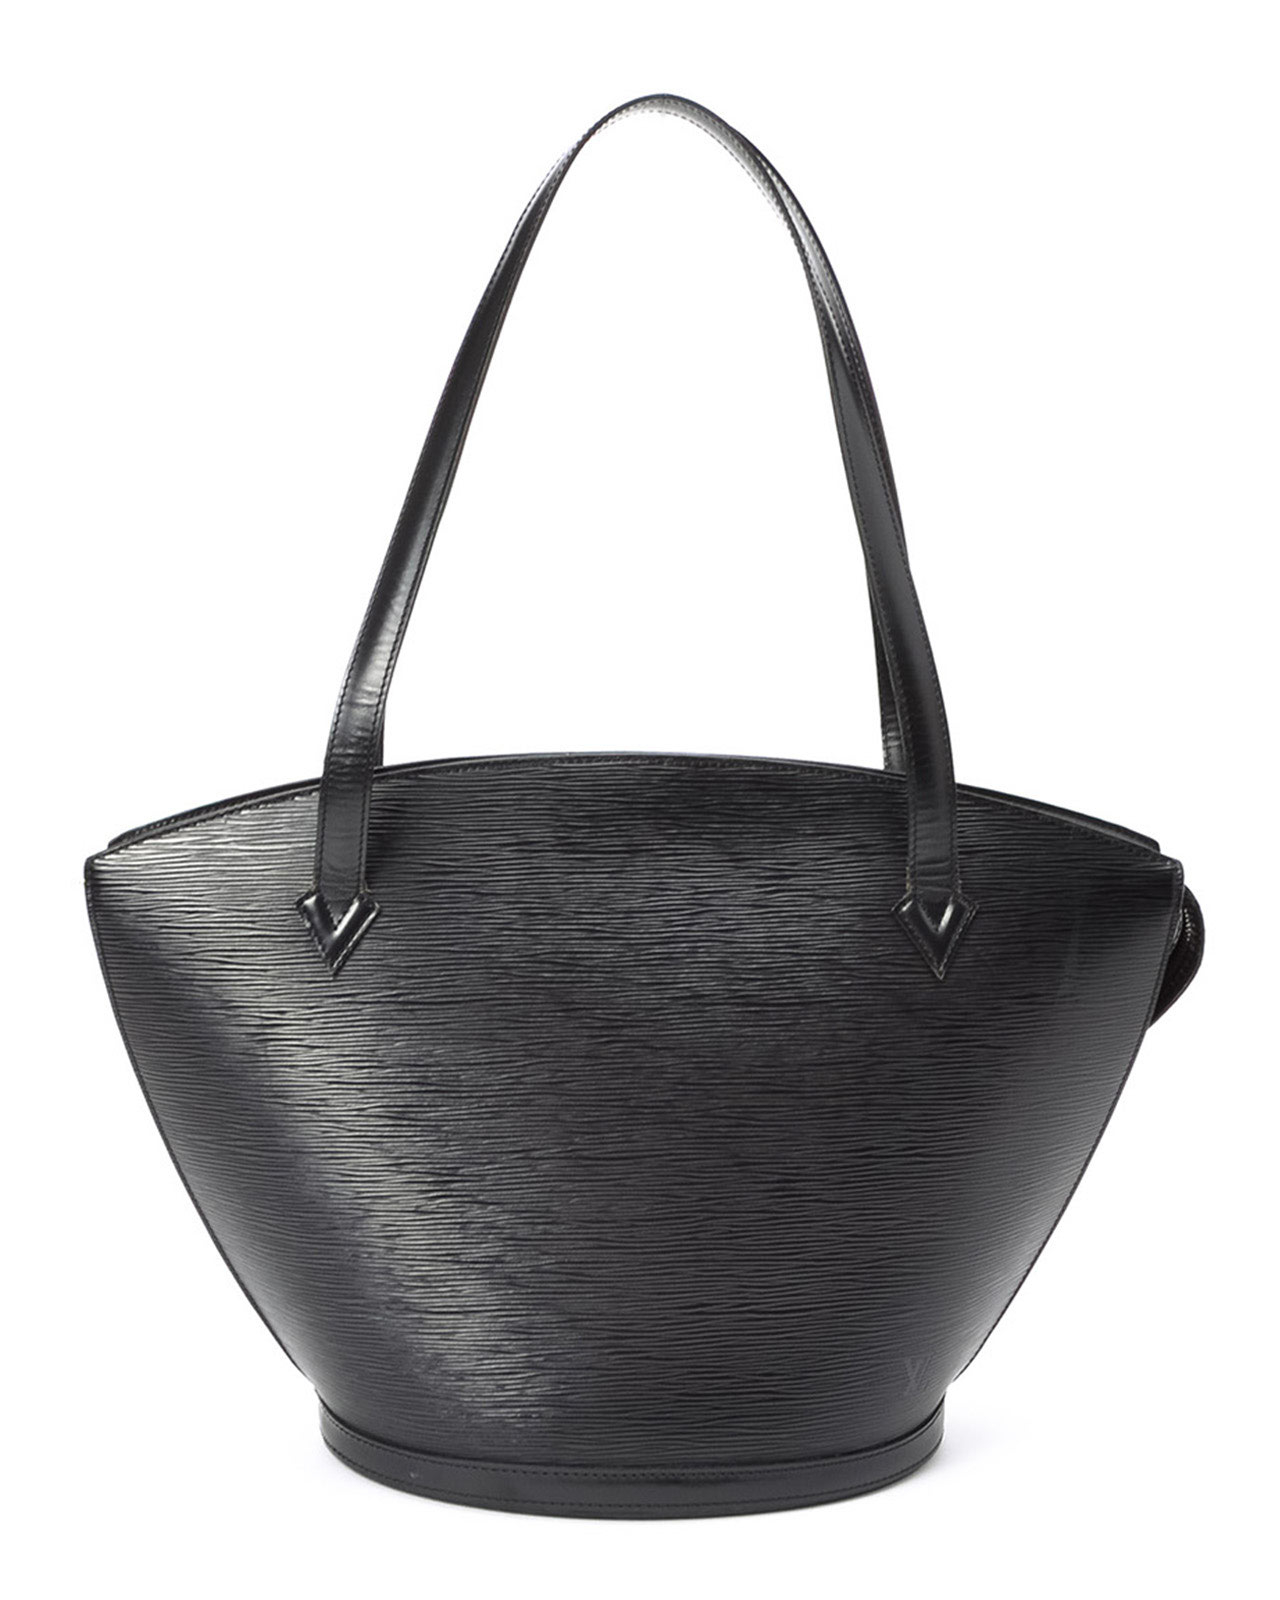 Lyst - Louis Vuitton Black Epi Saint-jacques Shopping Bag in Black